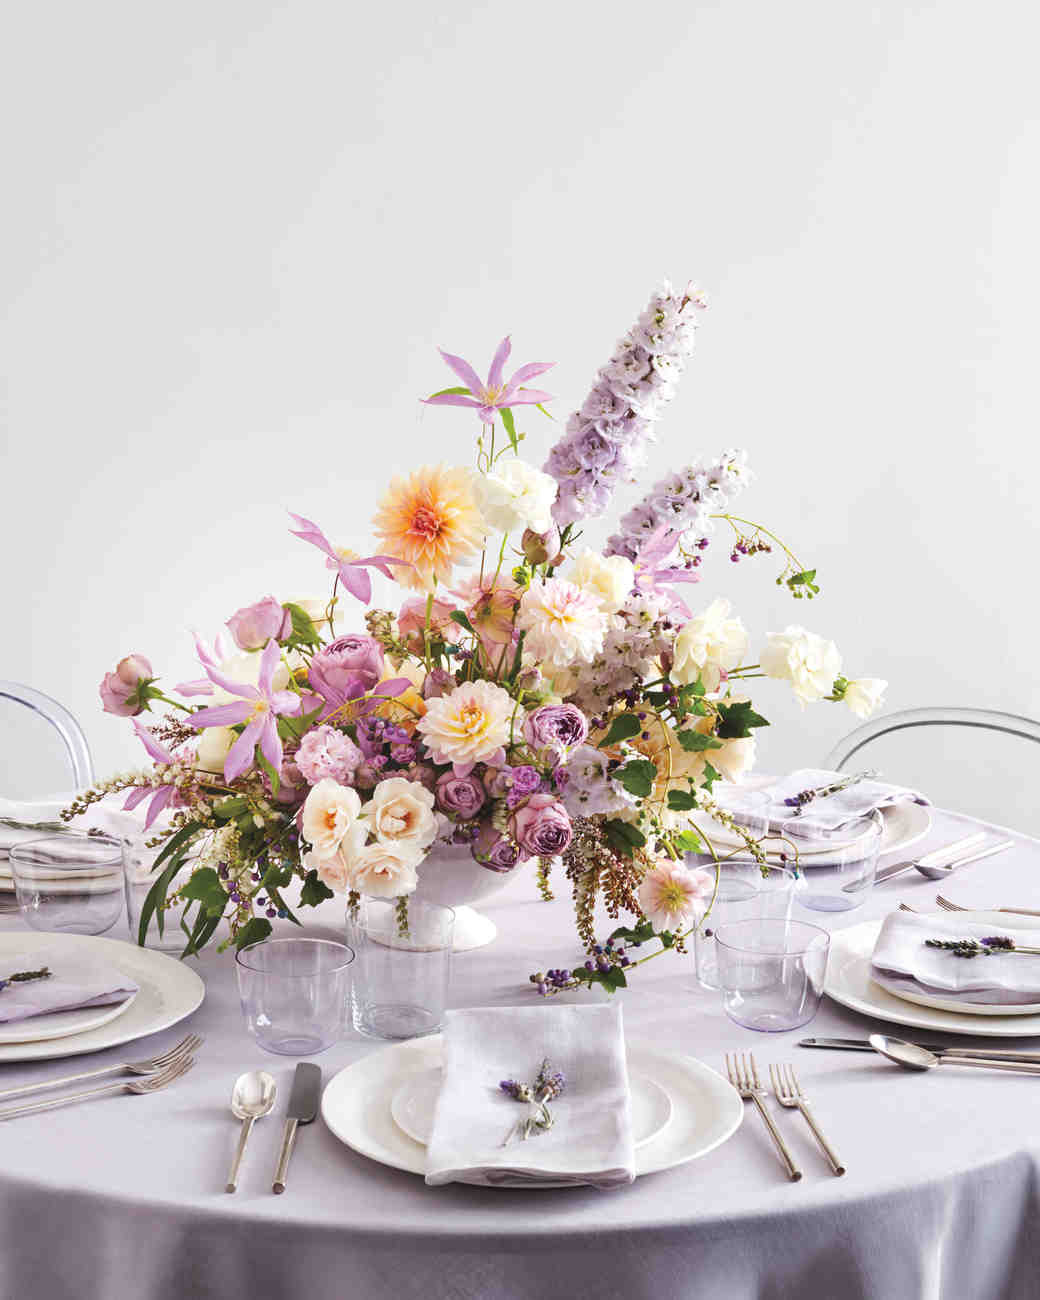 Diy Wedding Flower Centerpieces
 23 DIY Wedding Centerpieces We Love